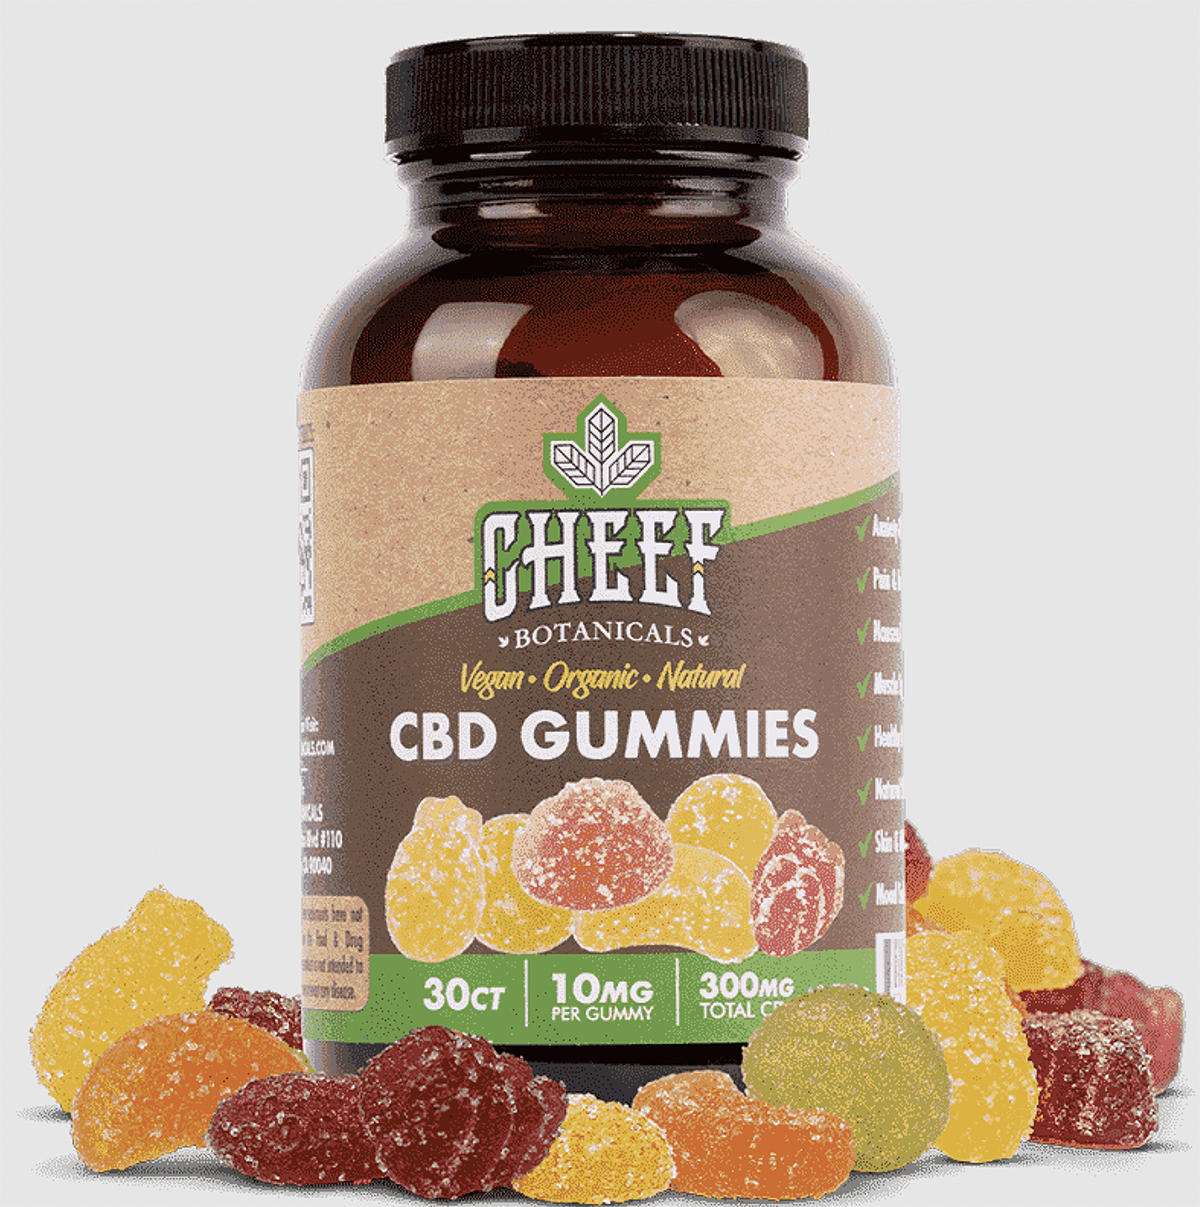 CBD living gummies with 300 mg CBD